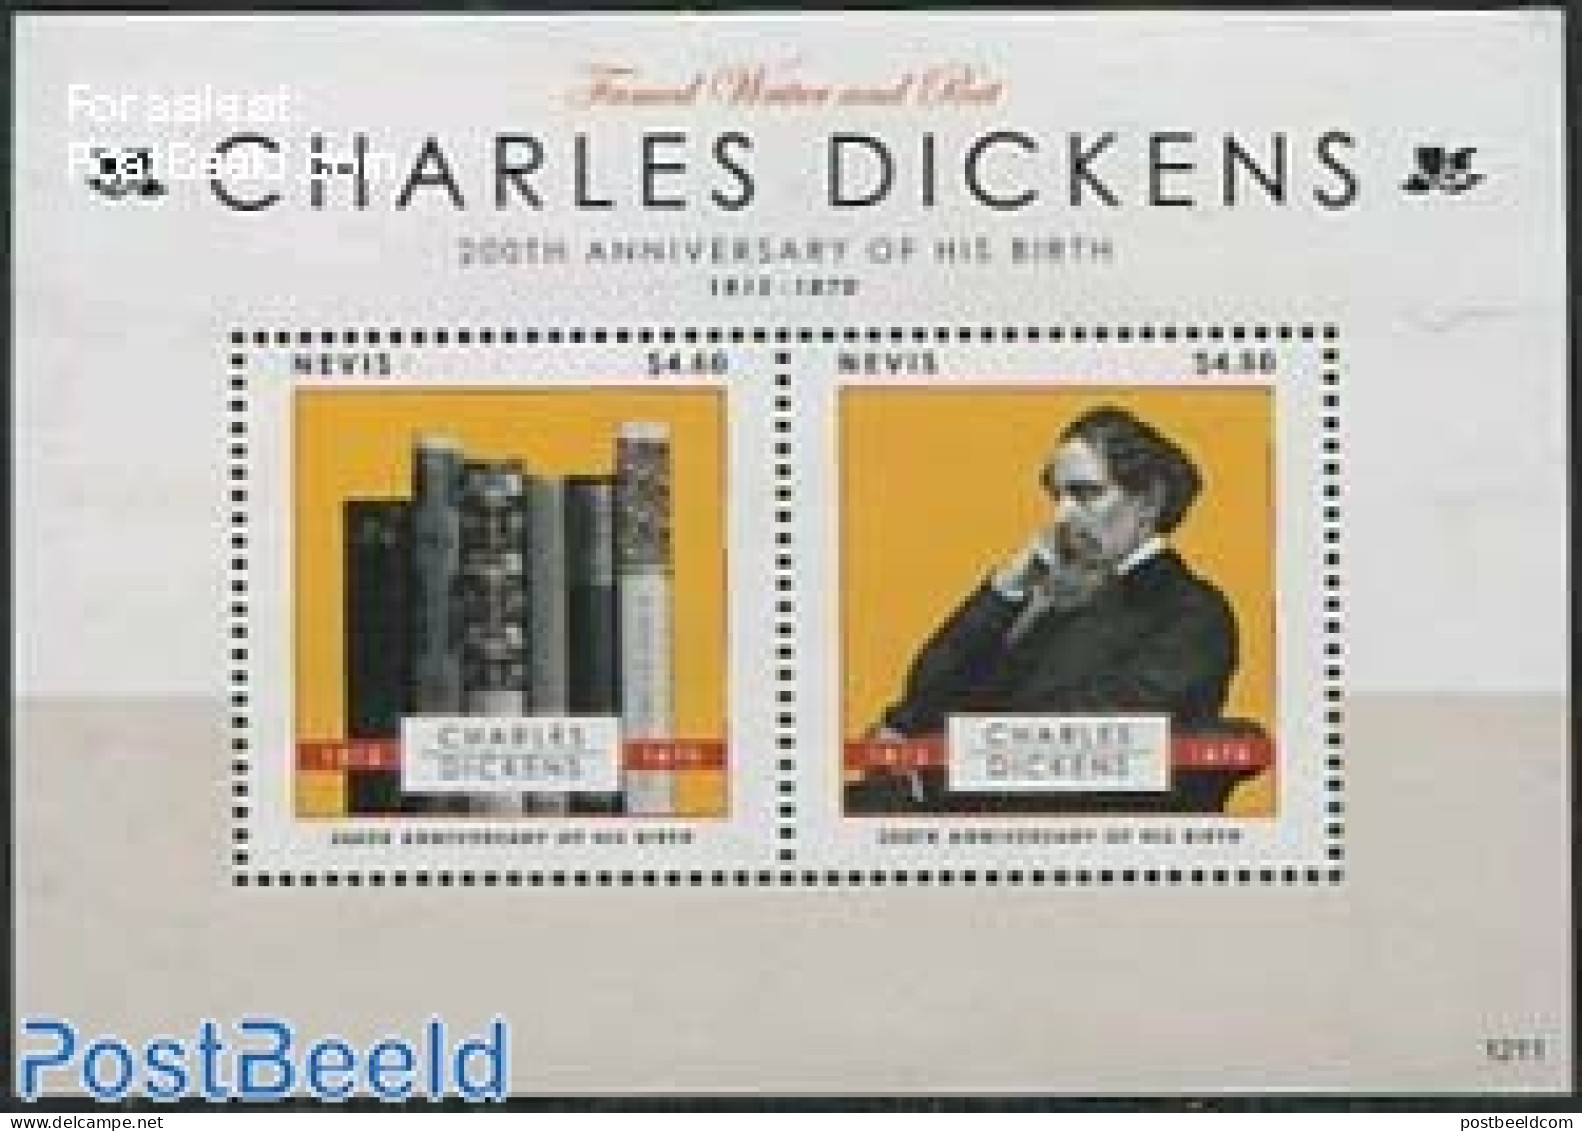 Nevis 2012 Charles Dickens S/s, Mint NH, Art - Authors - Books - Schriftsteller